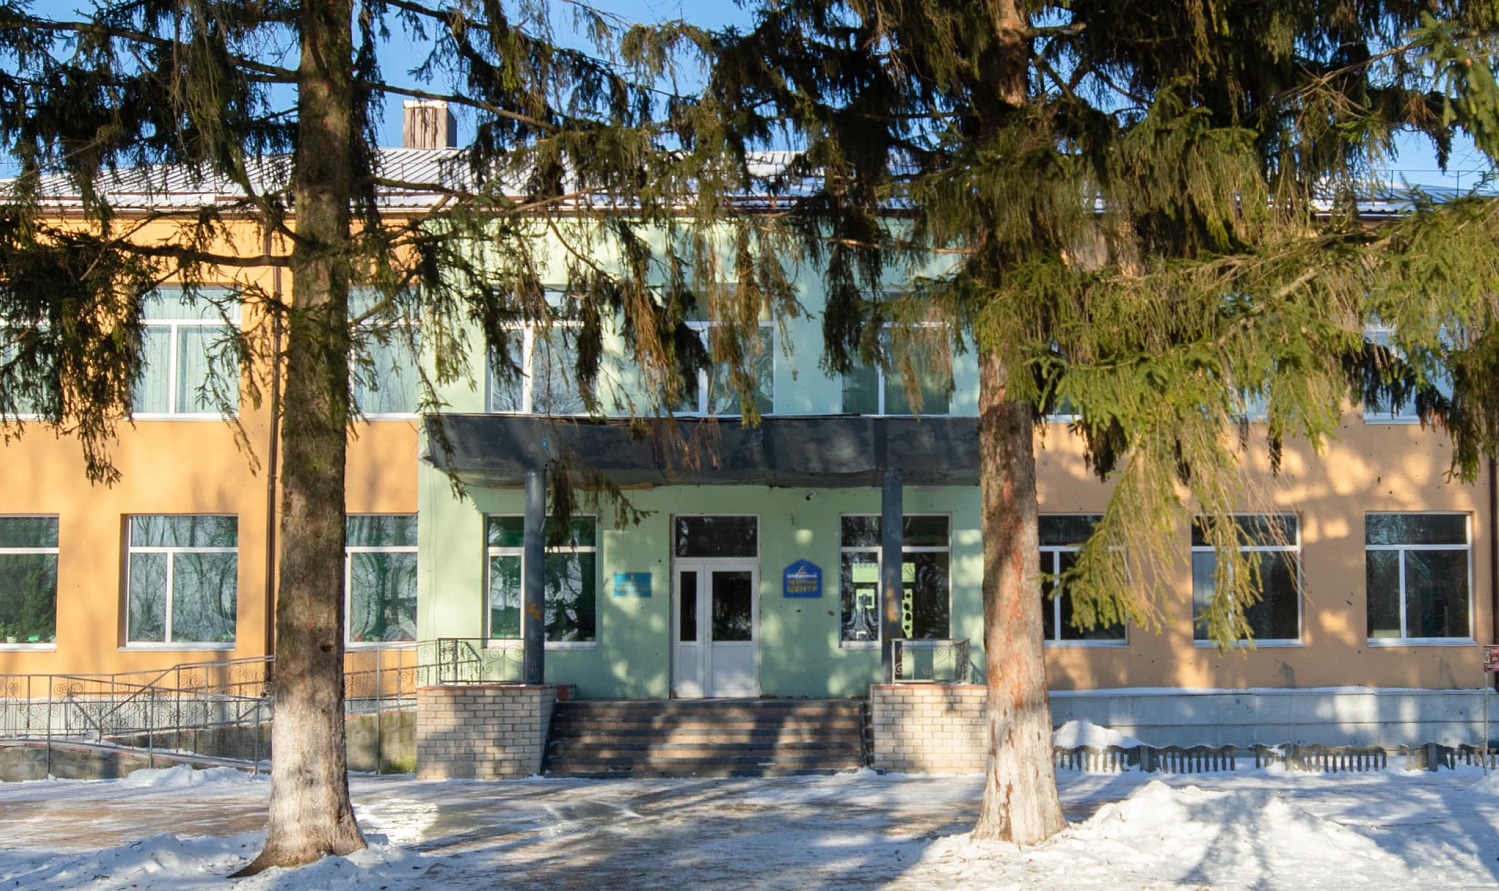 U-LEAD and Brave restored school in Novyi Bykiv